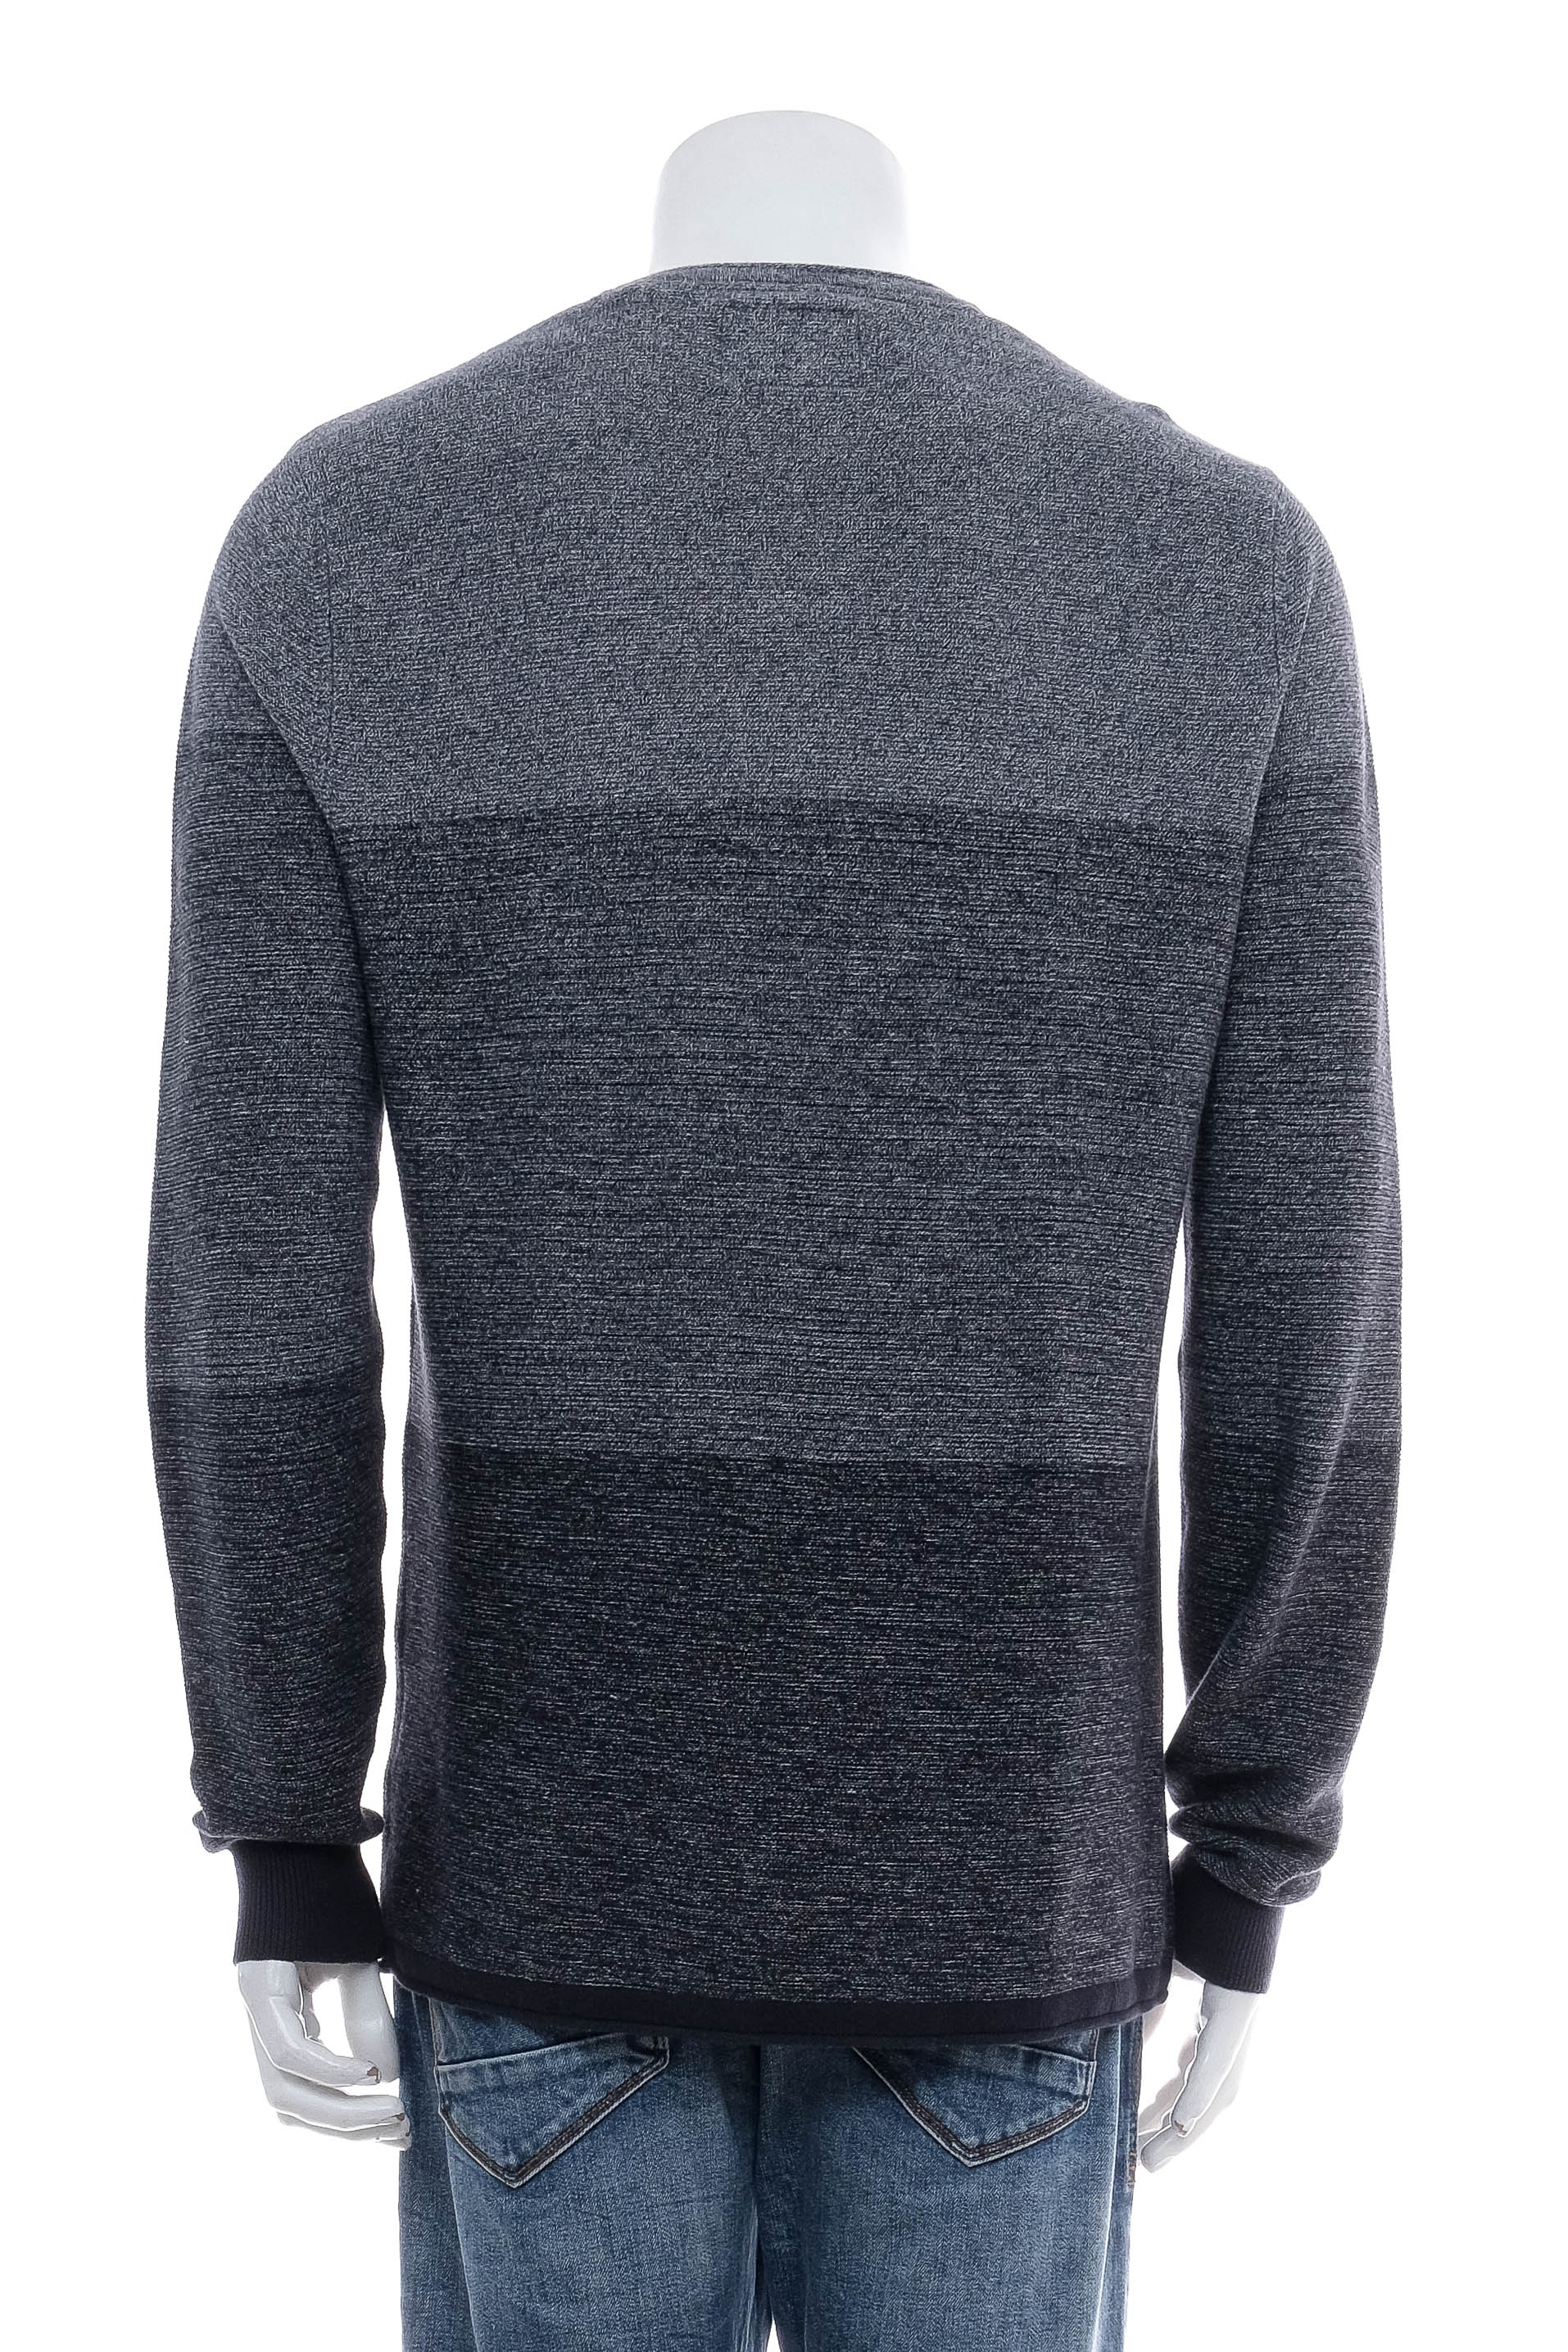 Men's sweater - Angelo Litrico - 1